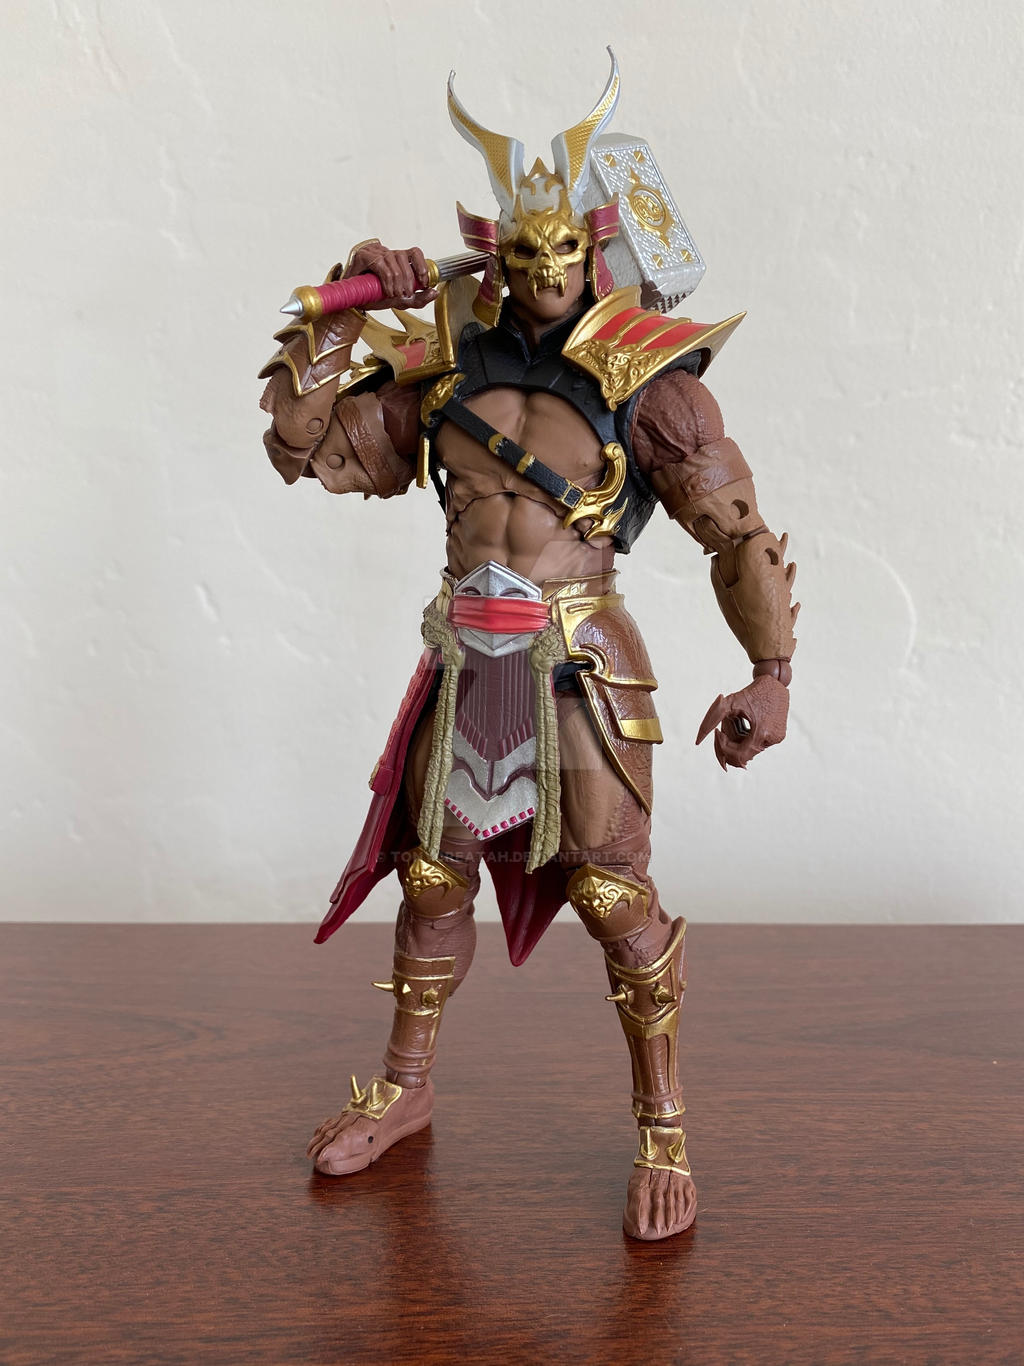 Shao Kahn (Mortal Kombat) Custom Action Figure